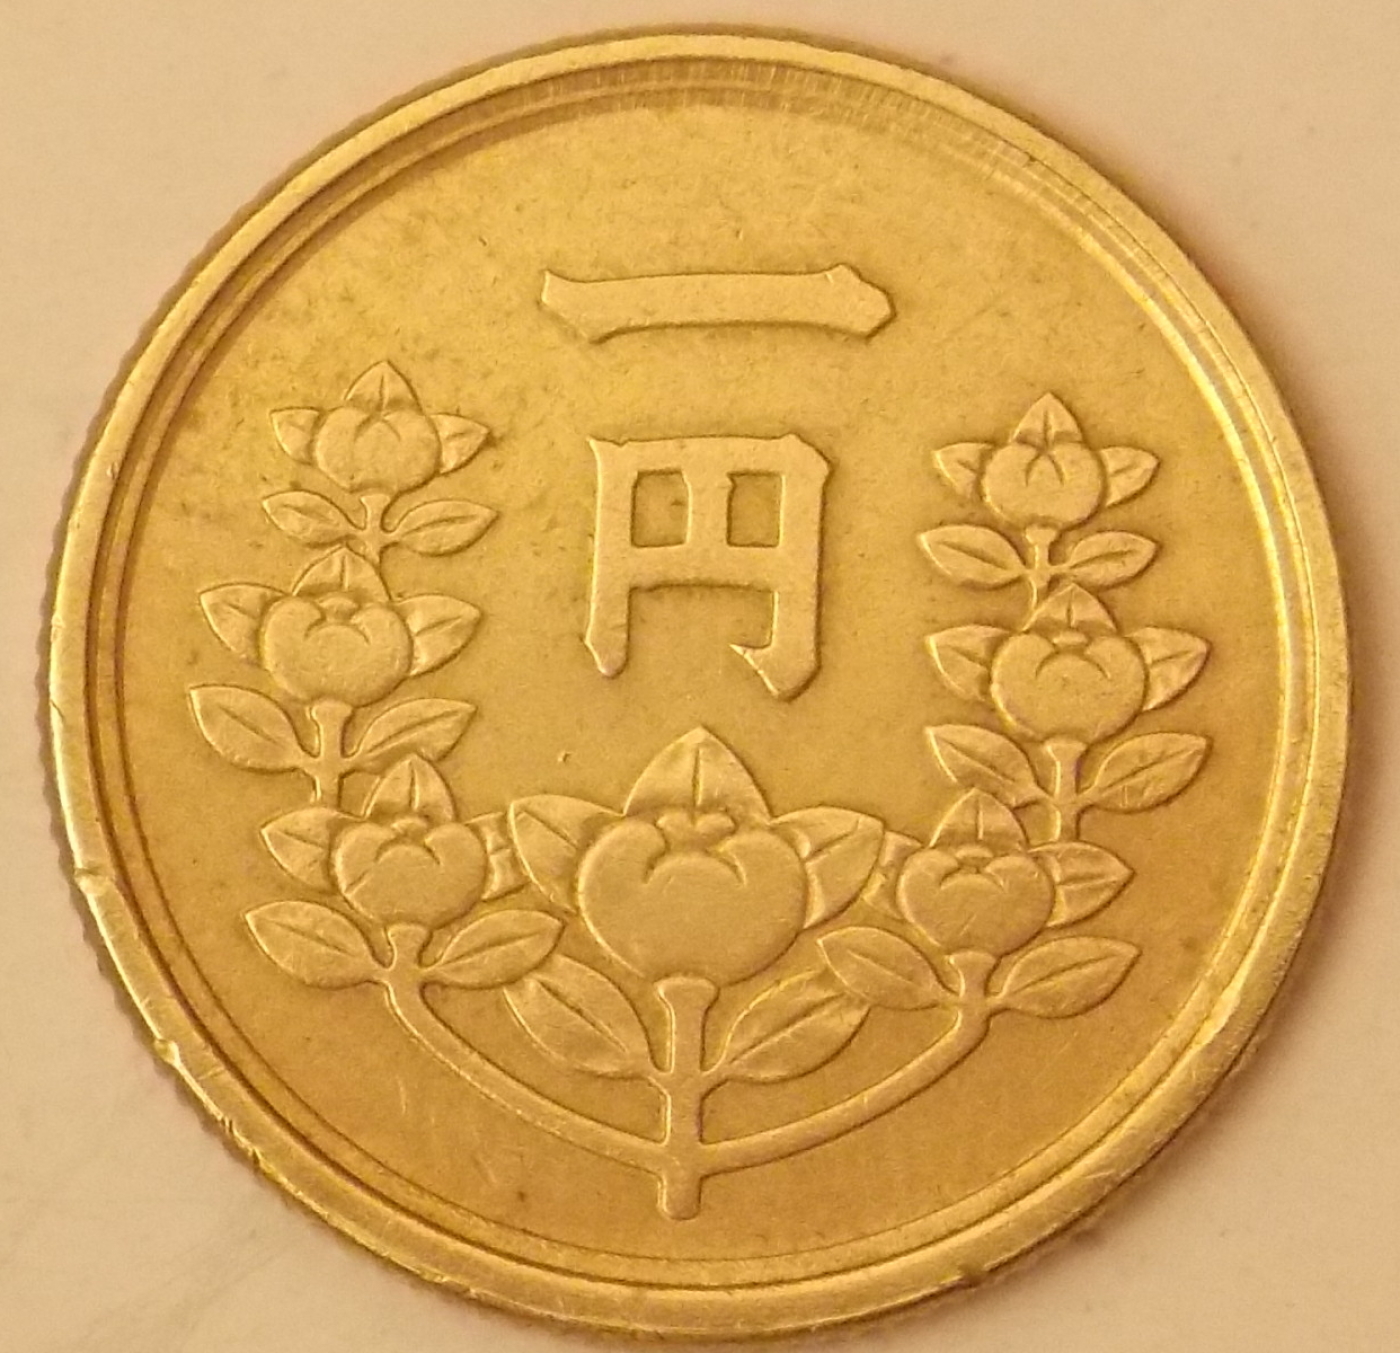 10 yen coins